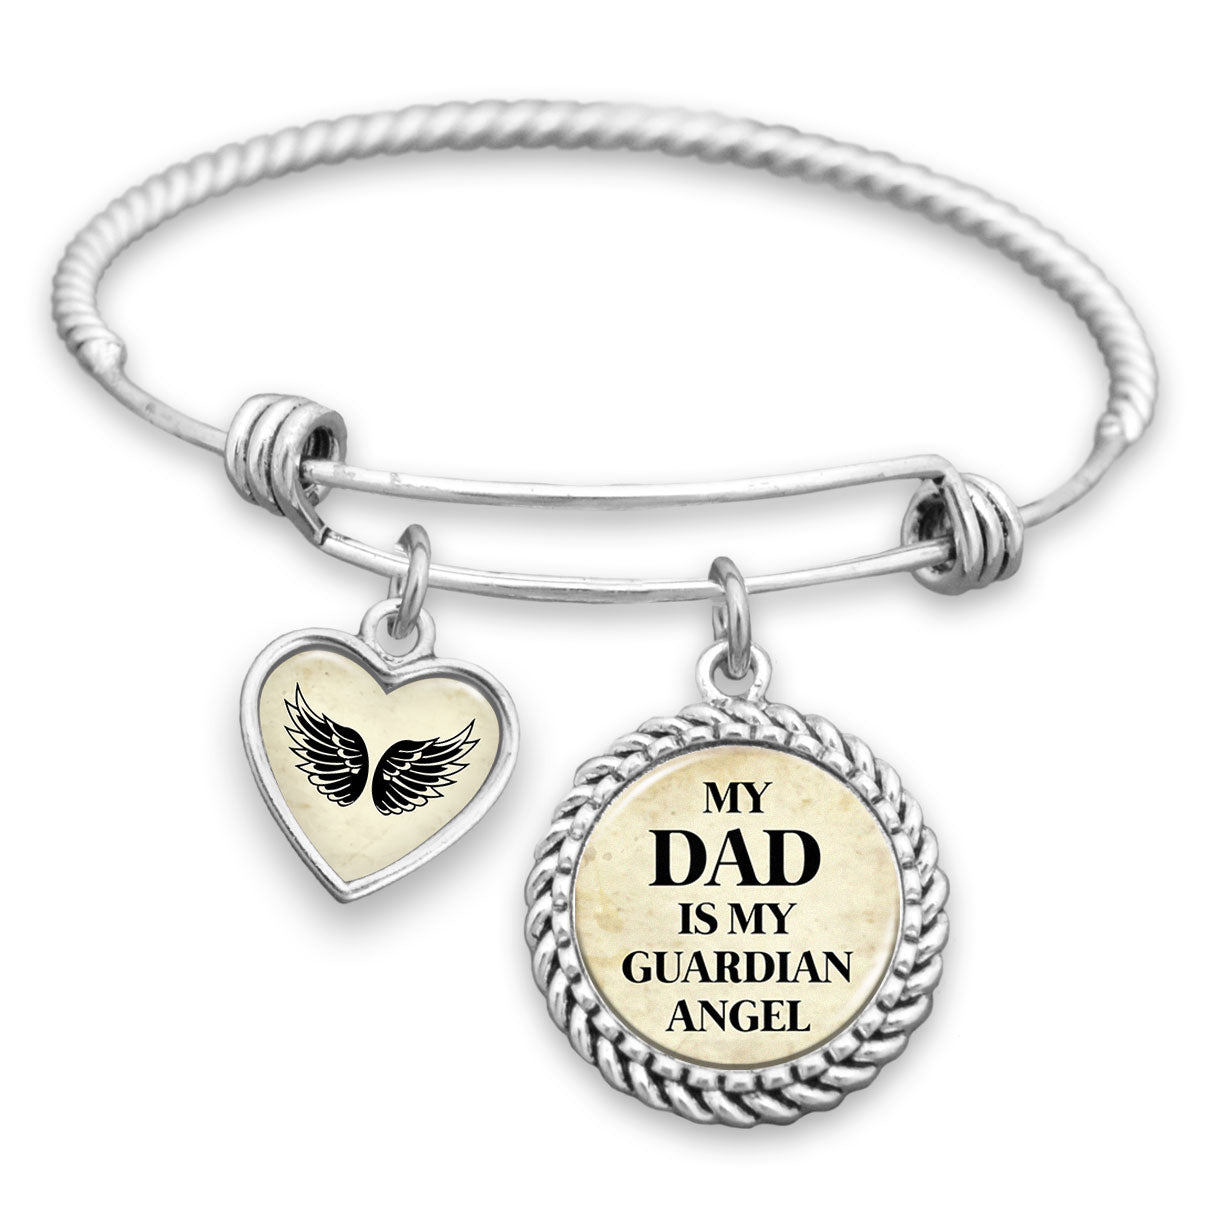 Personalized Guardian Angel Charm Bracelet